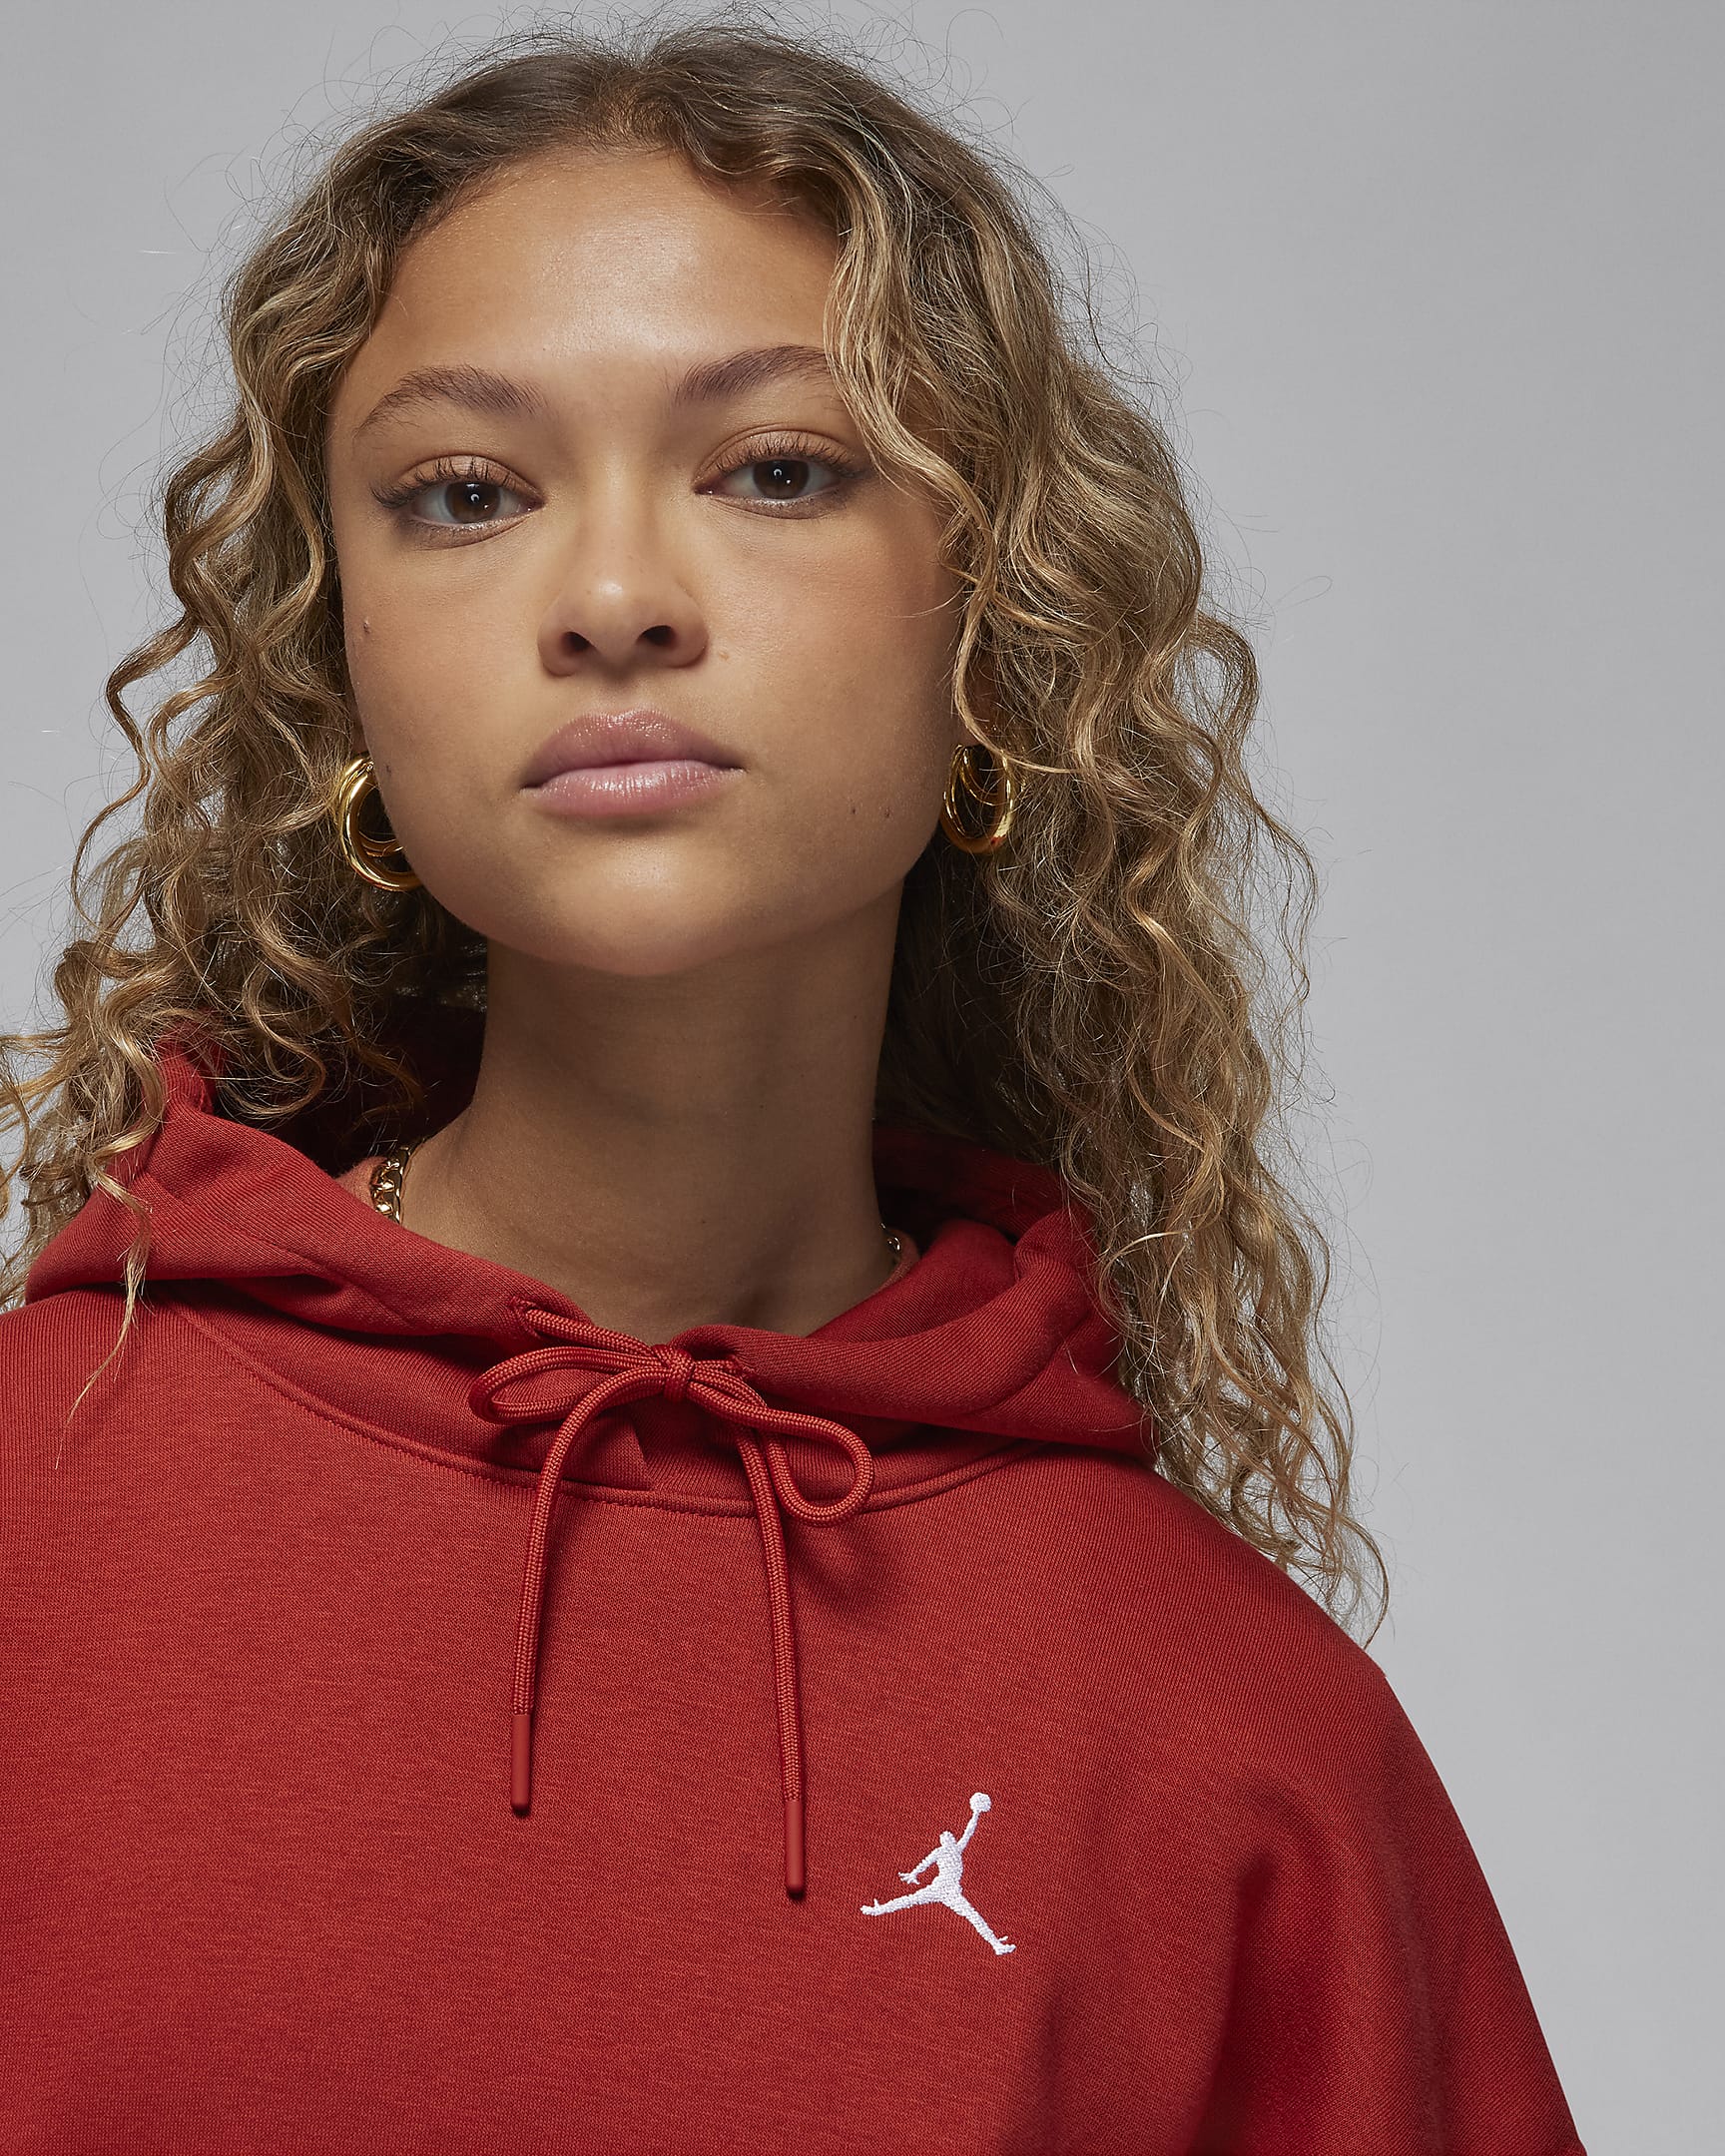 Jordan Brooklyn Fleece Women's Hoodie. Nike UK